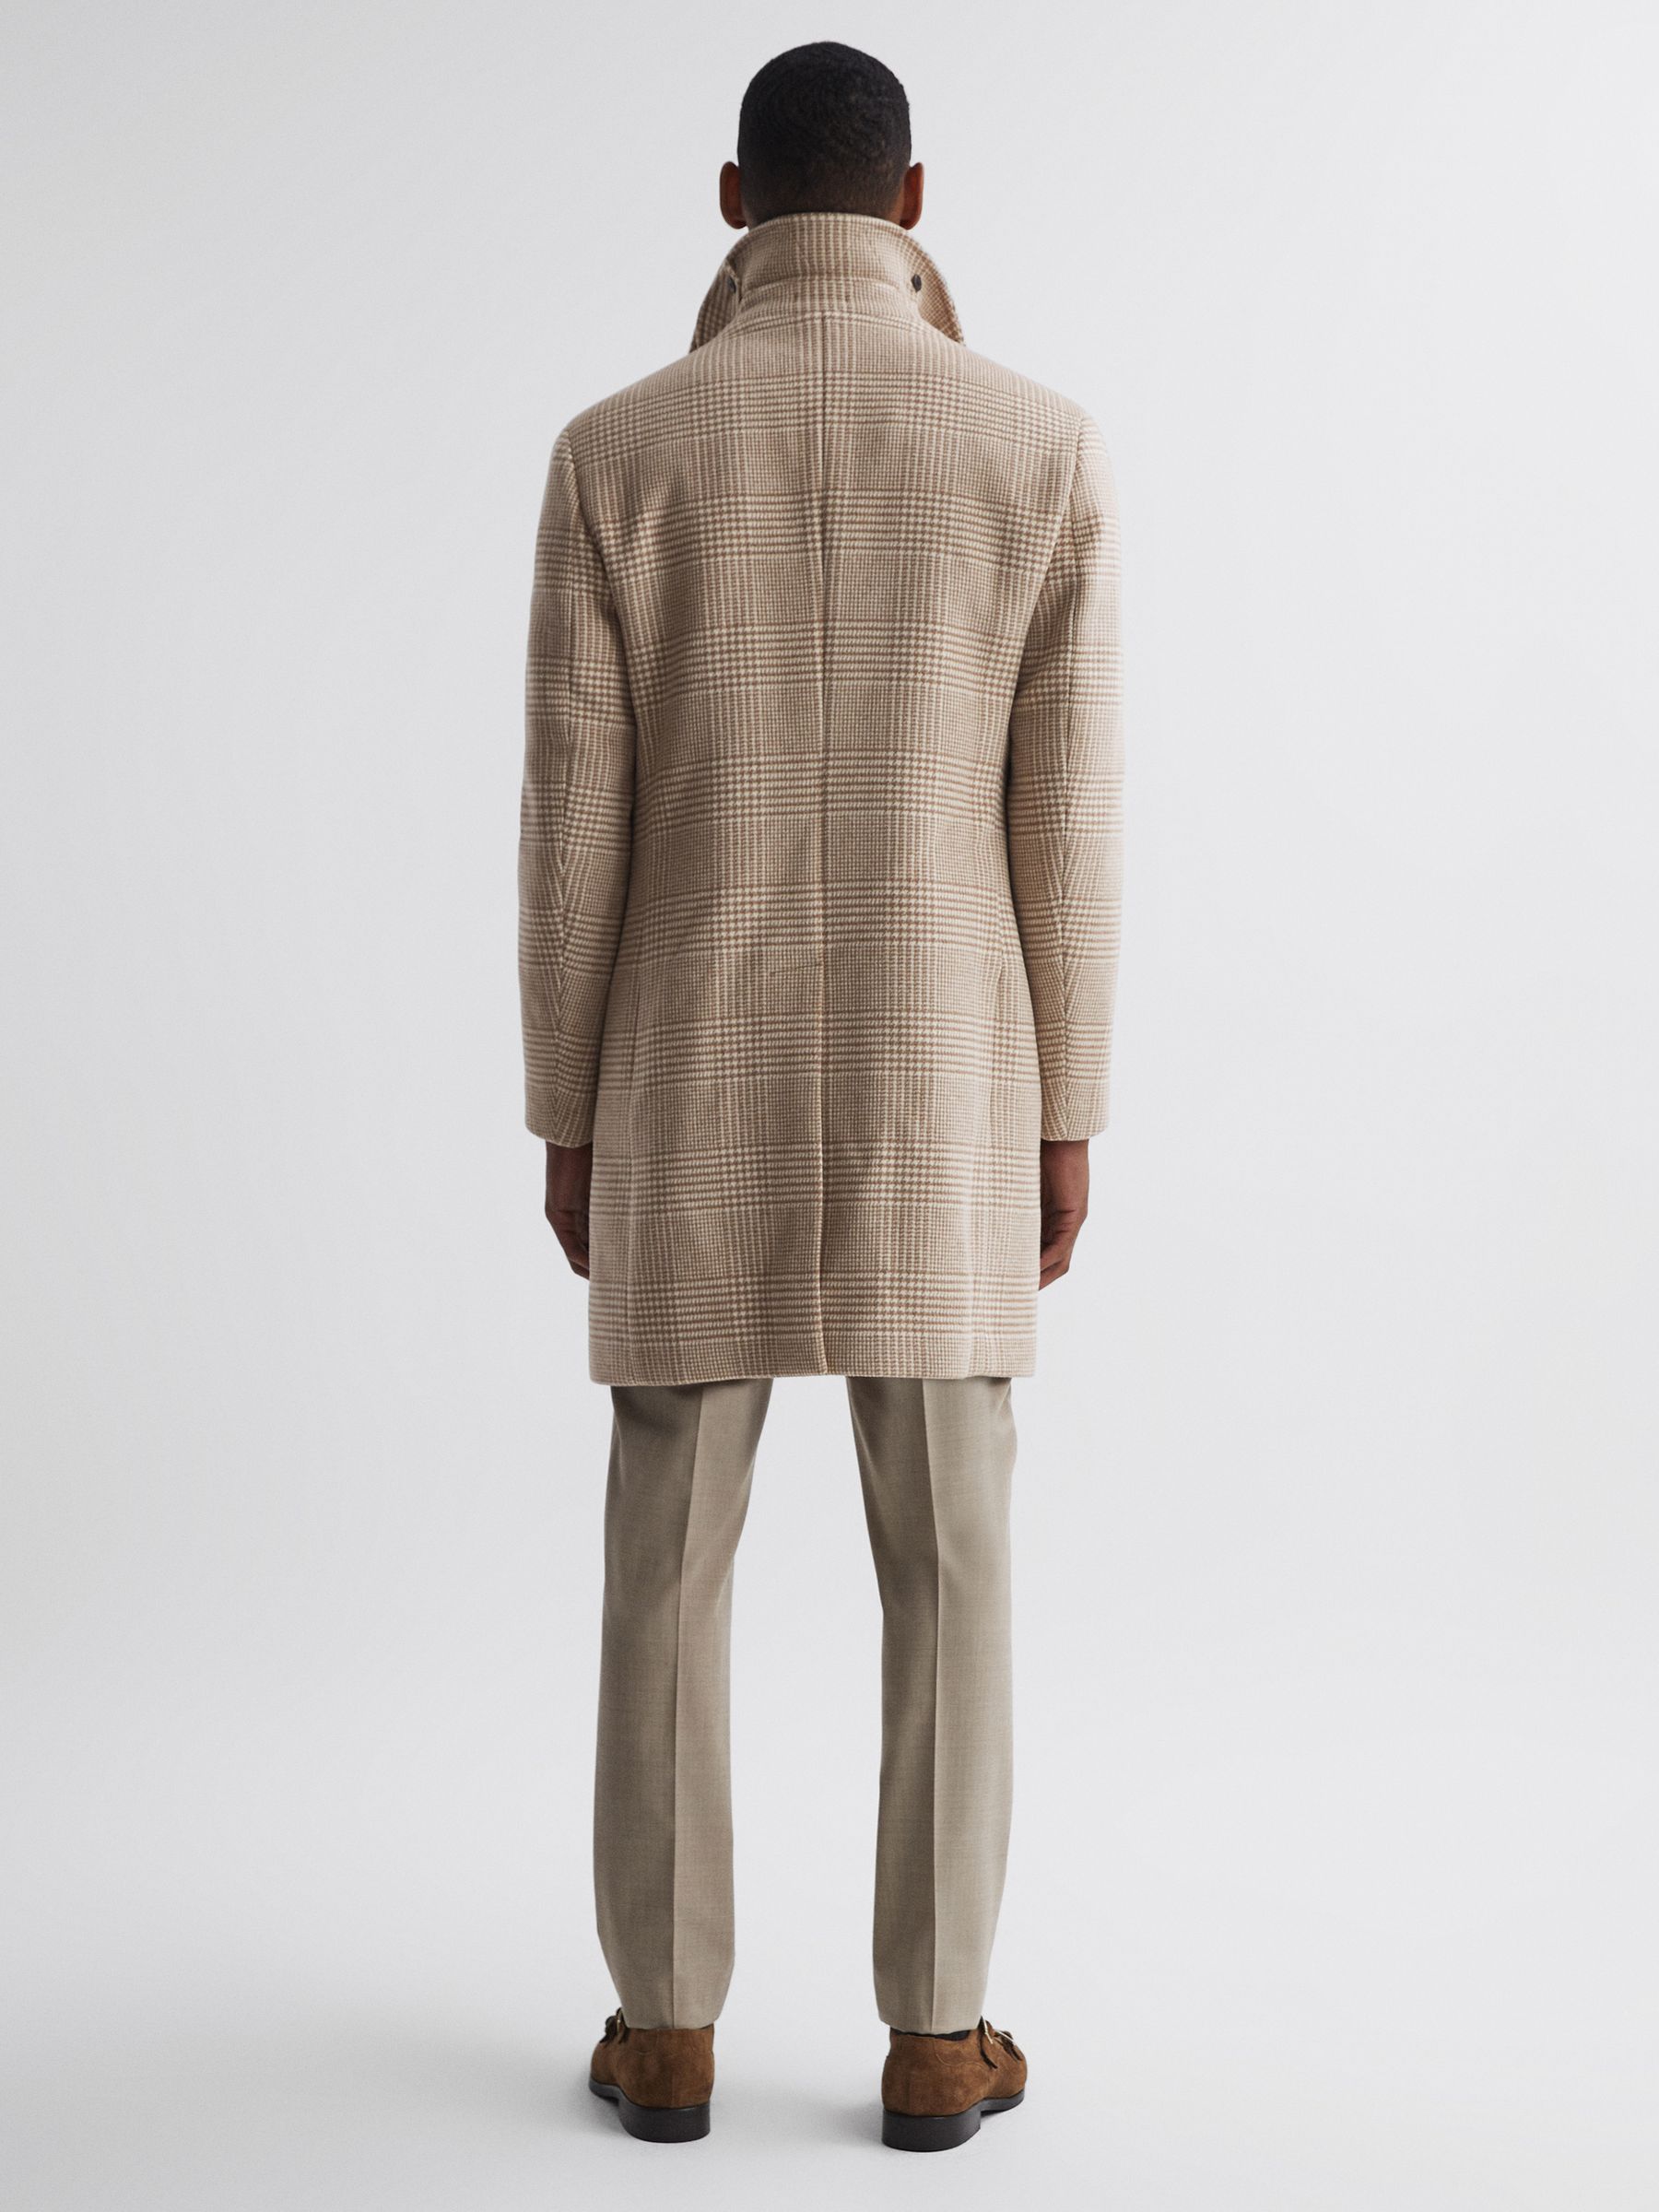 Reiss Bellagio Wool Check Mid Length Coat | REISS USA